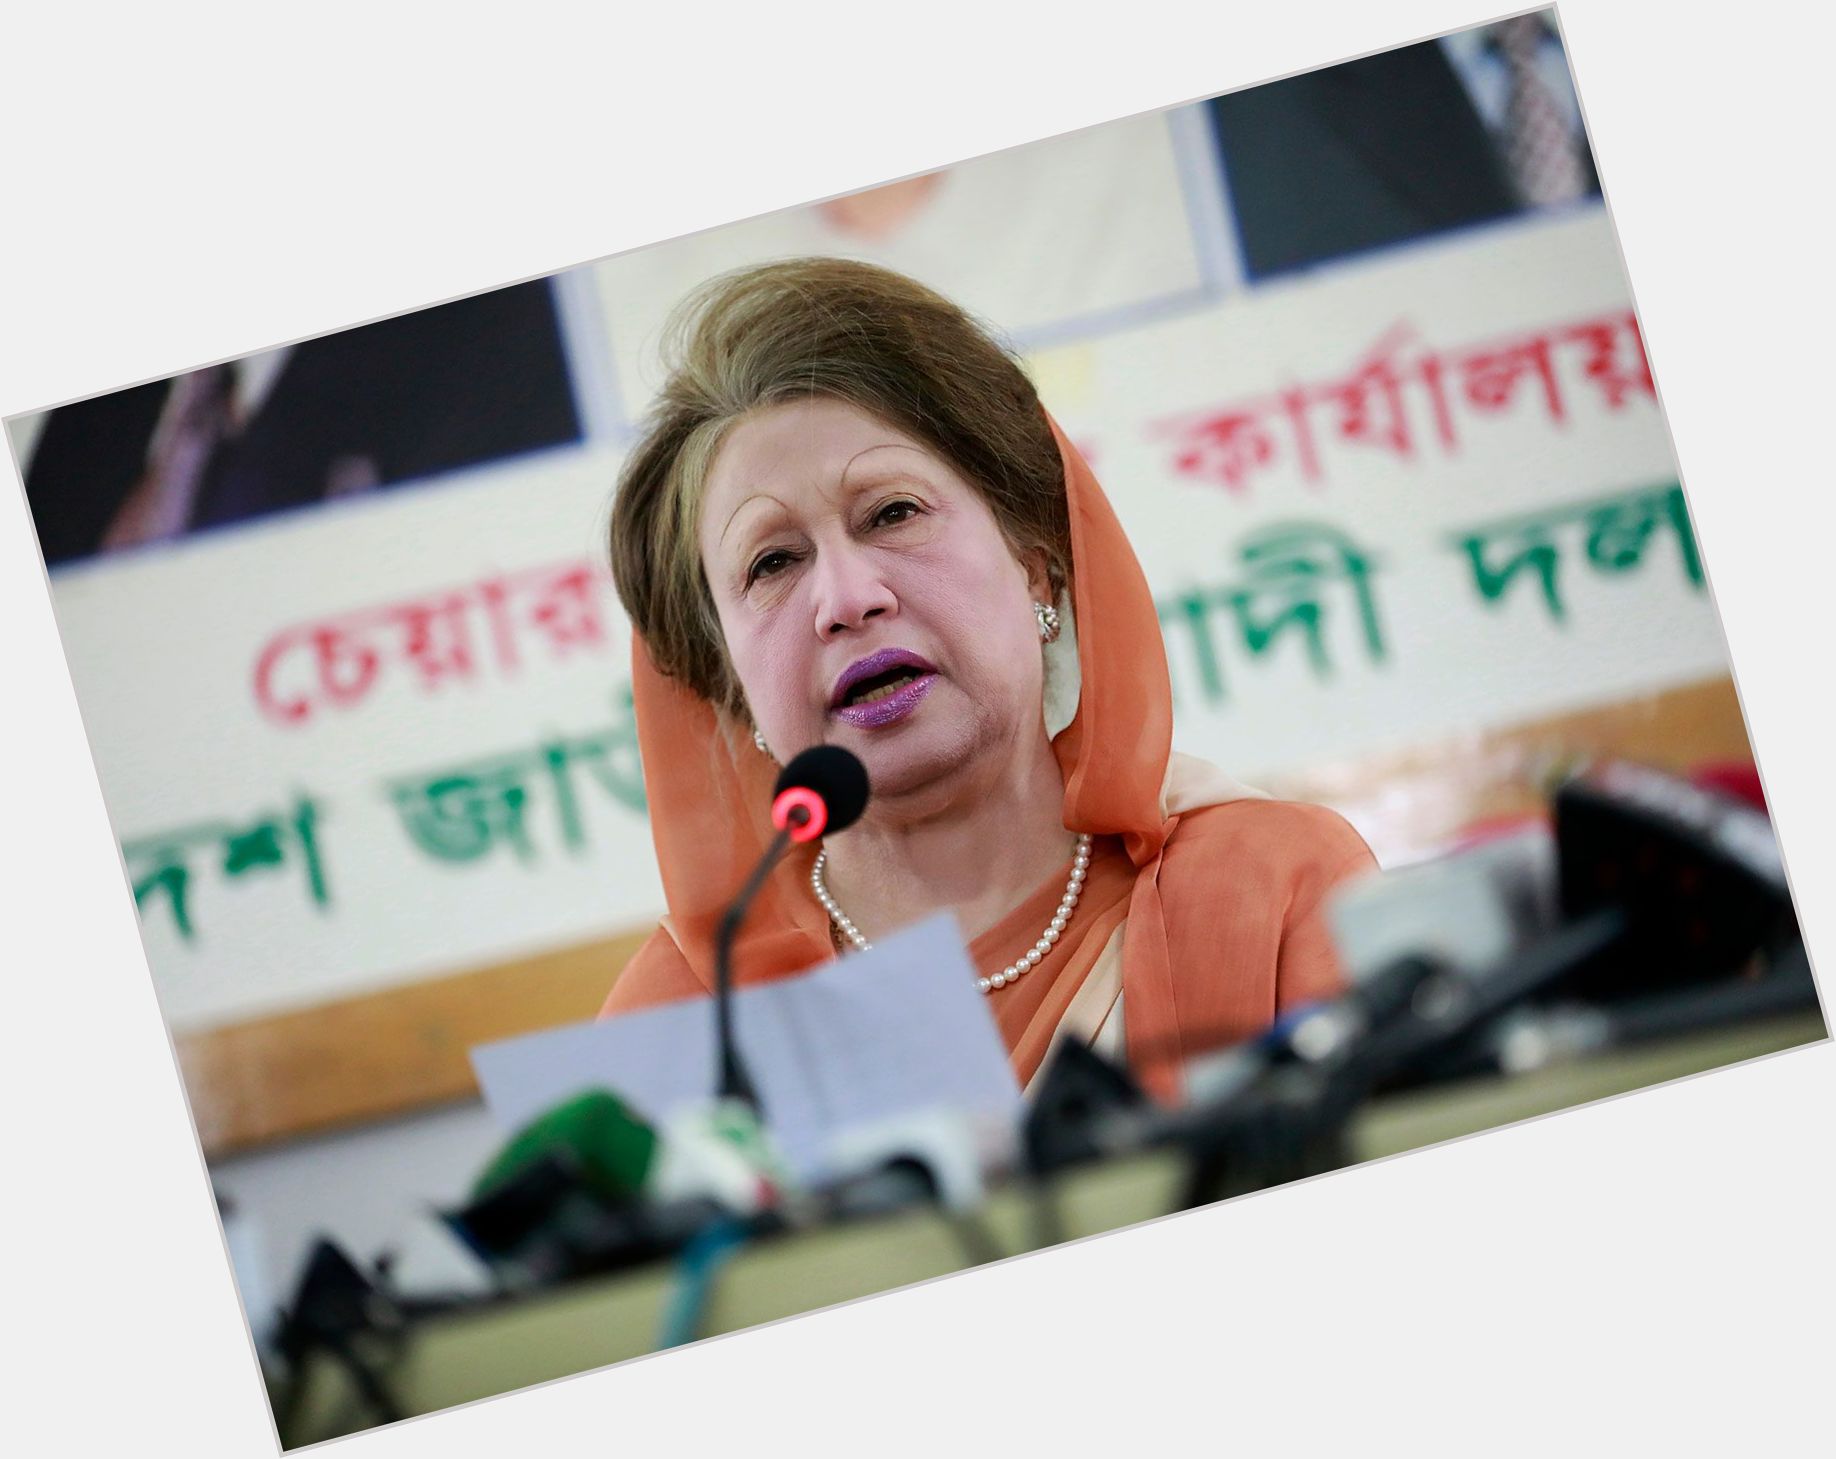 Https://fanpagepress.net/m/W/who Is Khaleda Zia 4